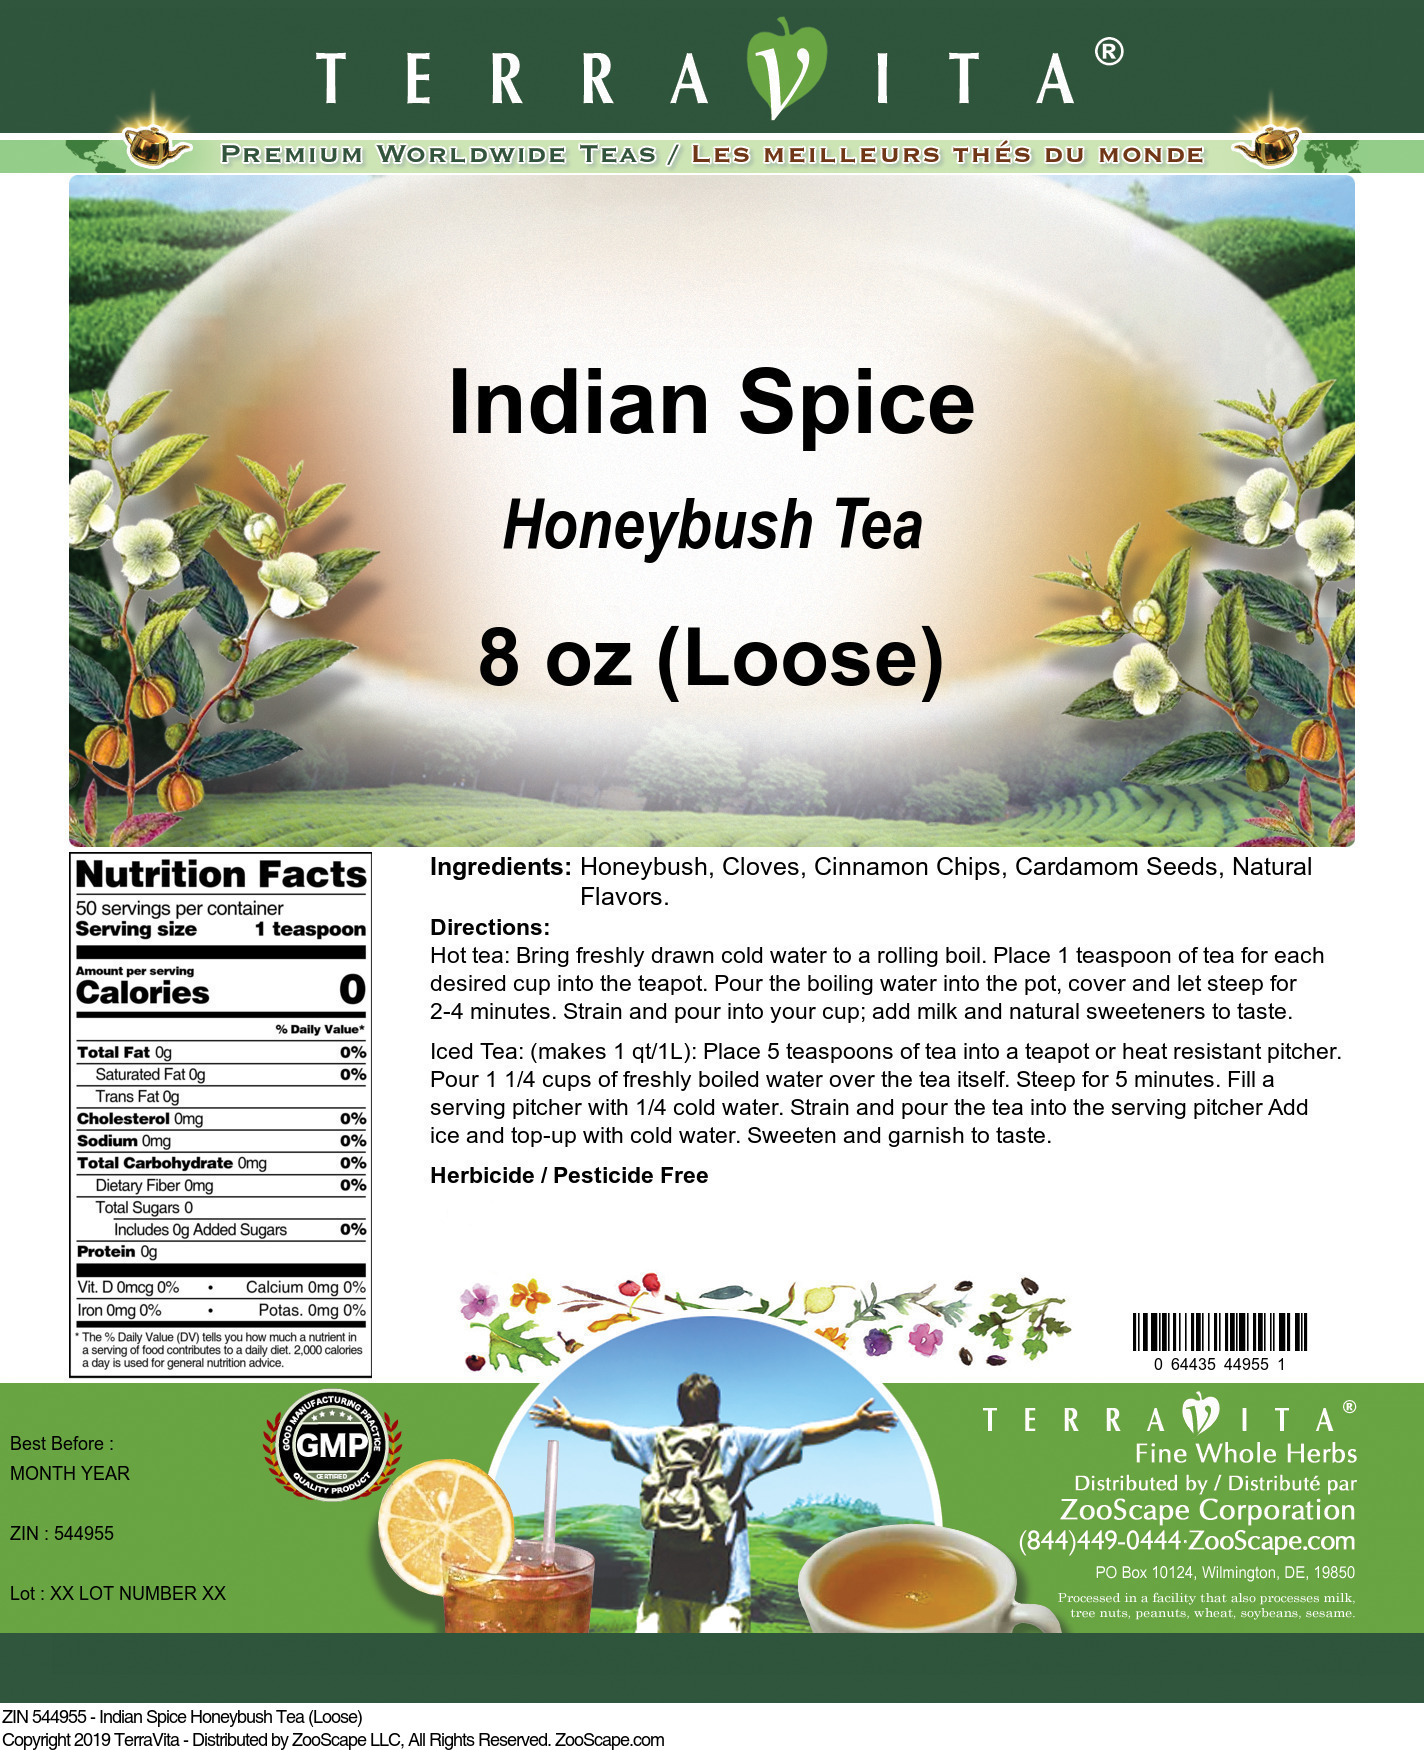 Indian Spice Honeybush Tea (Loose) - Label